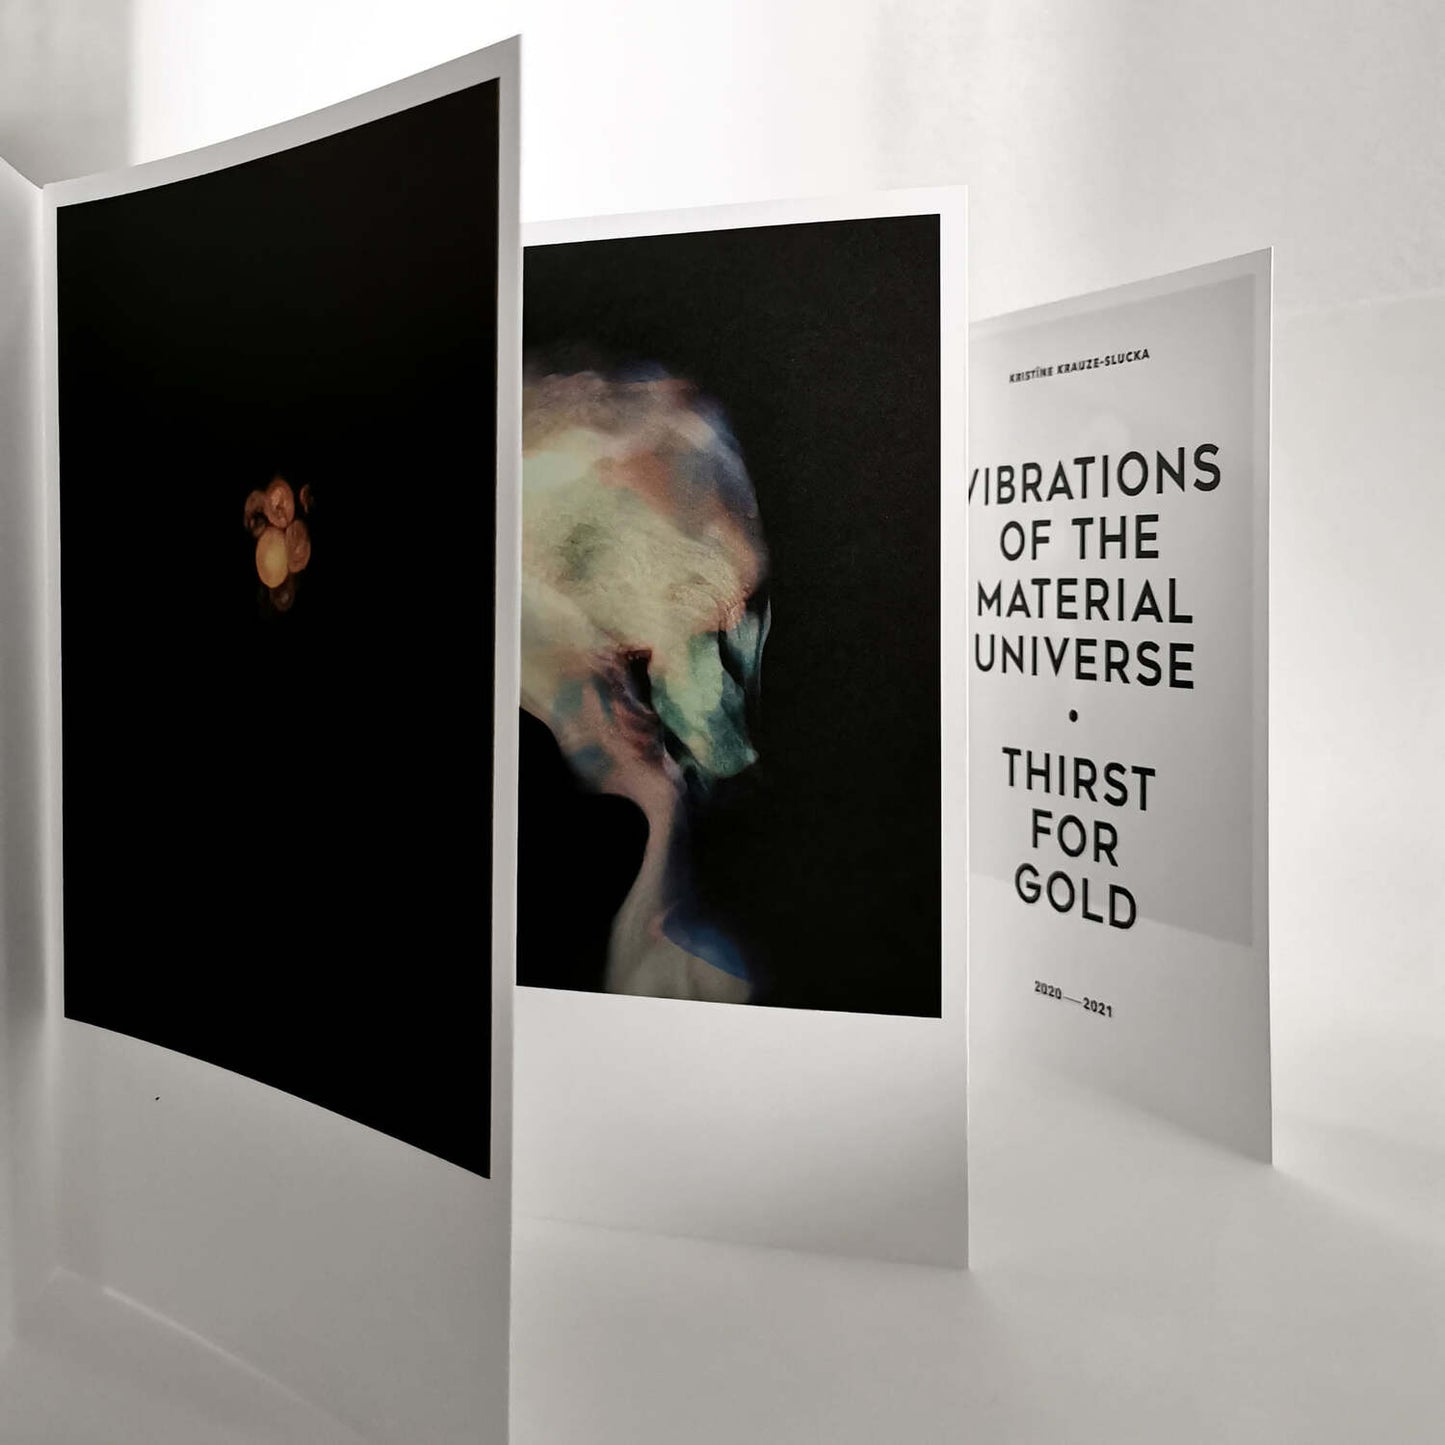 Kristīne Krauze-Slucka. Vibrations of Material Universe. Thirst of Gold